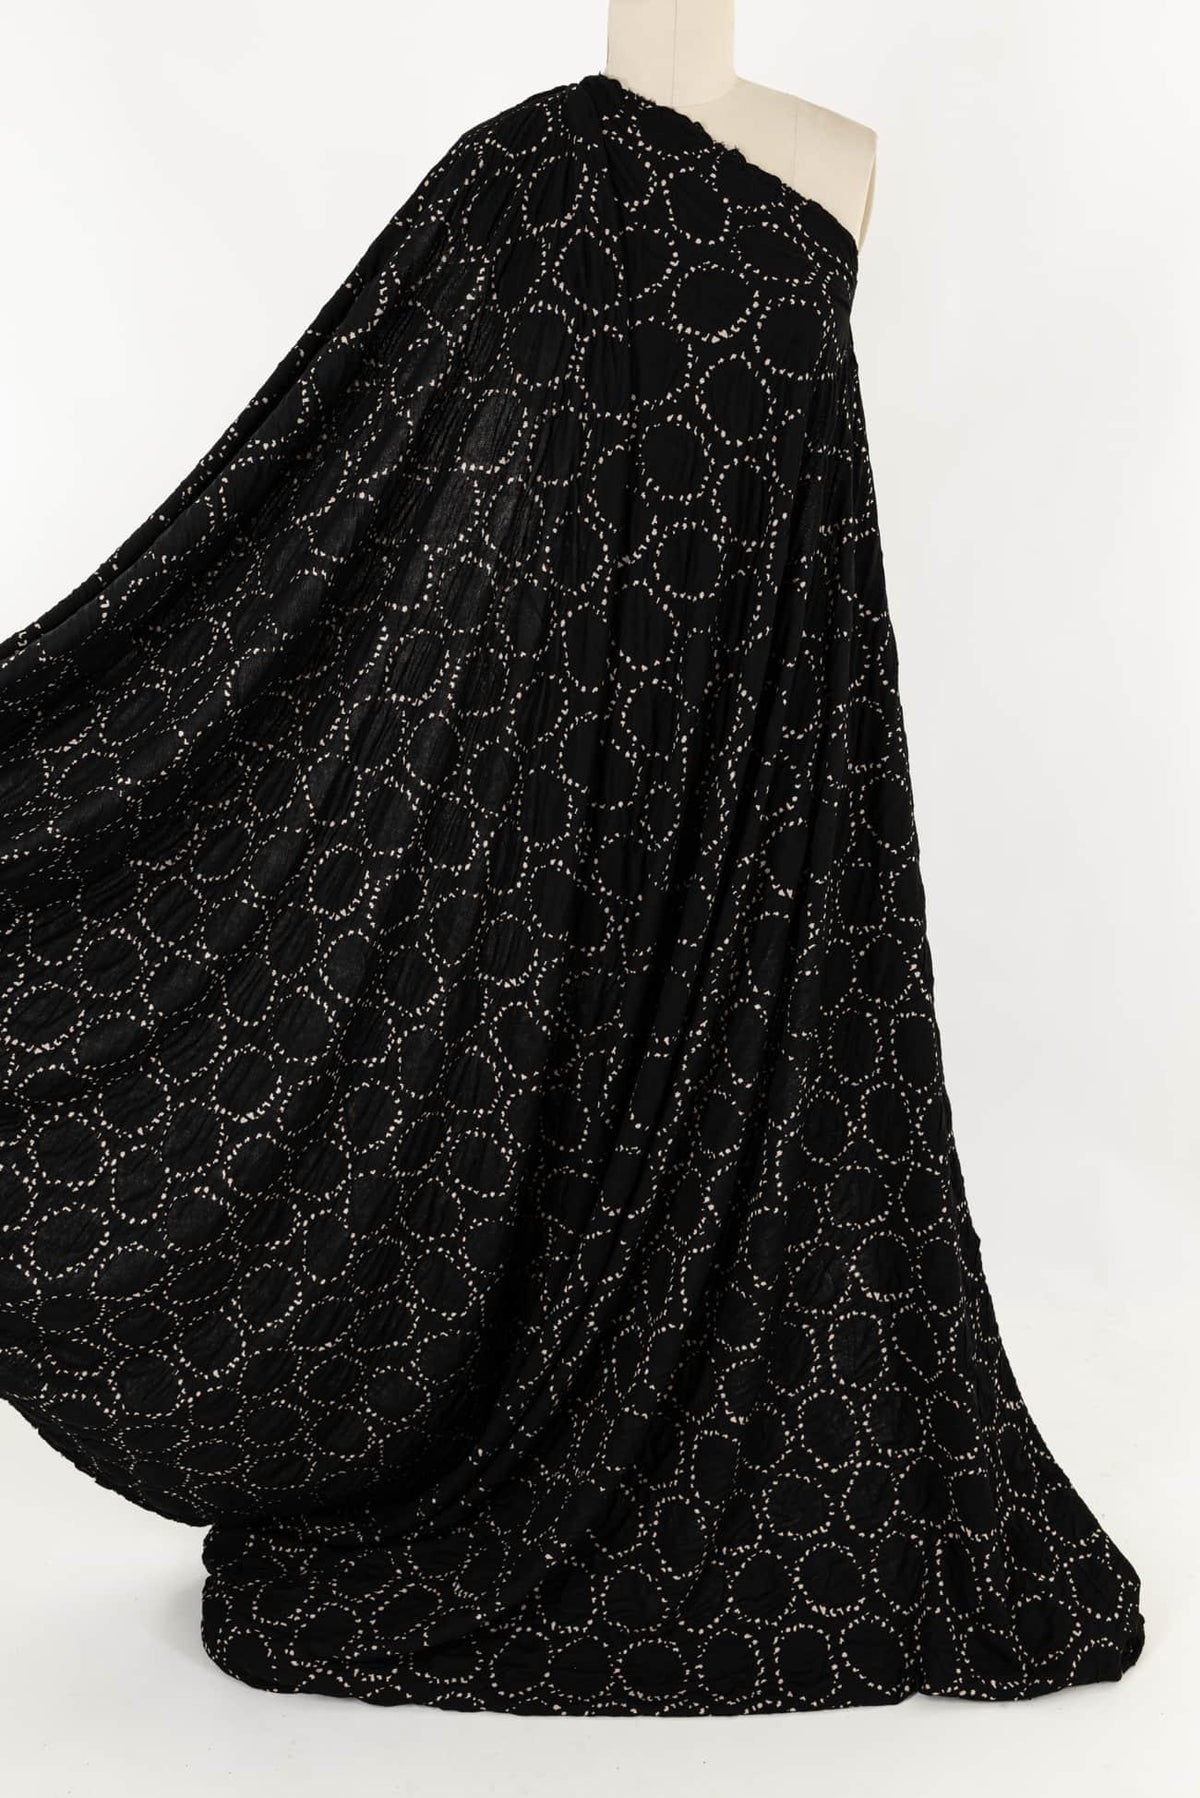 Orbits Knit - Marcy Tilton Fabrics